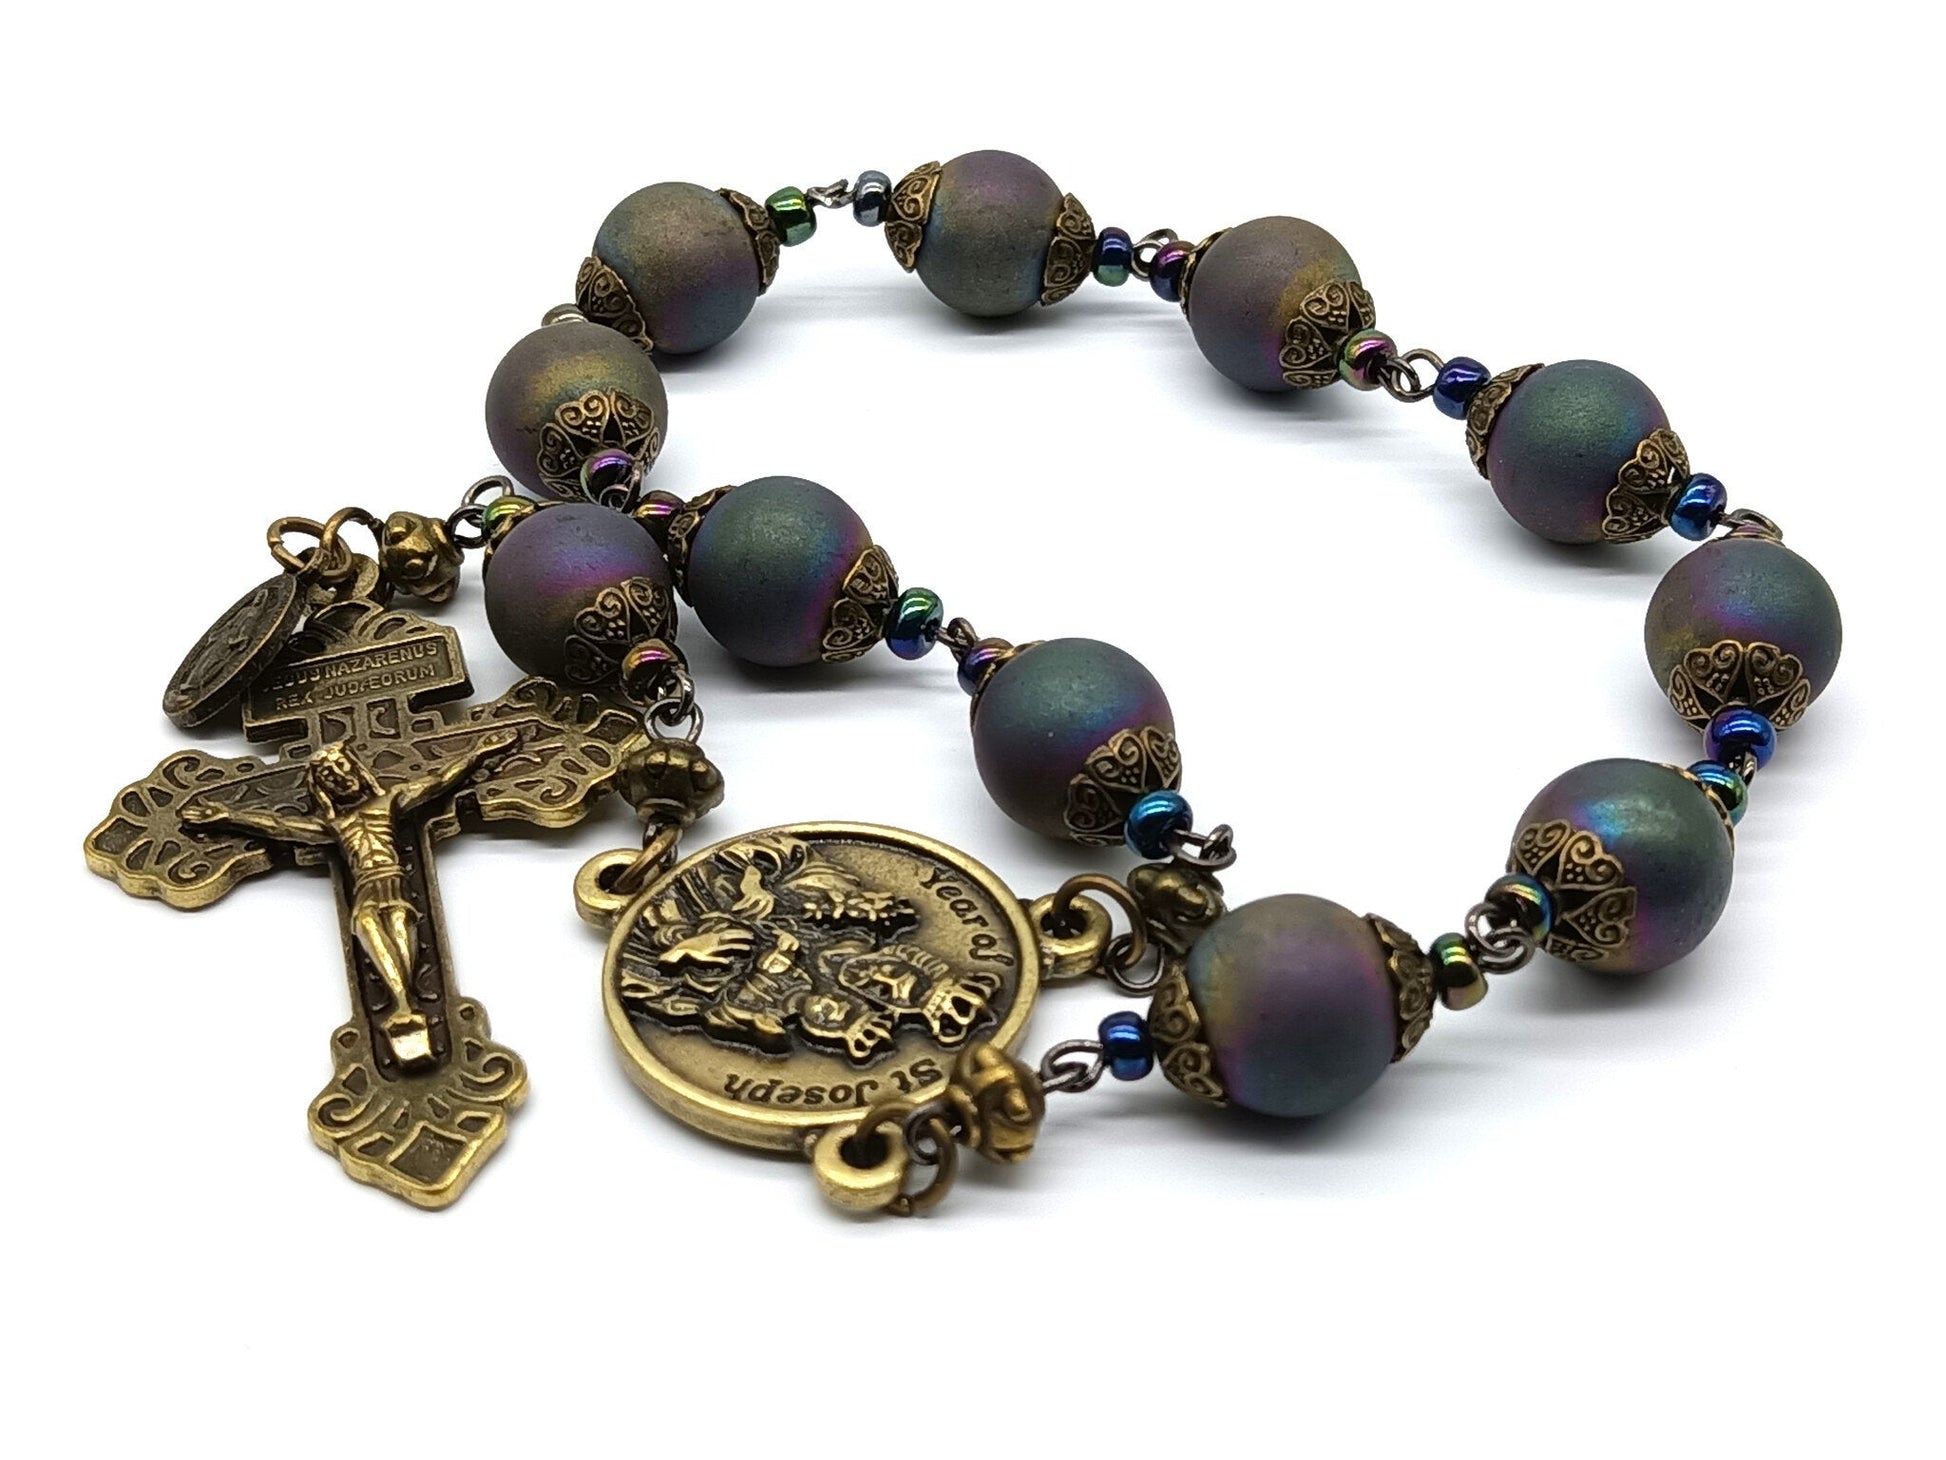 Year of Saint Joseph unique rosary beads single decade with petrol coloured hematite gemstone beads, bronze Pardon crucifix and St. Joseph medal.